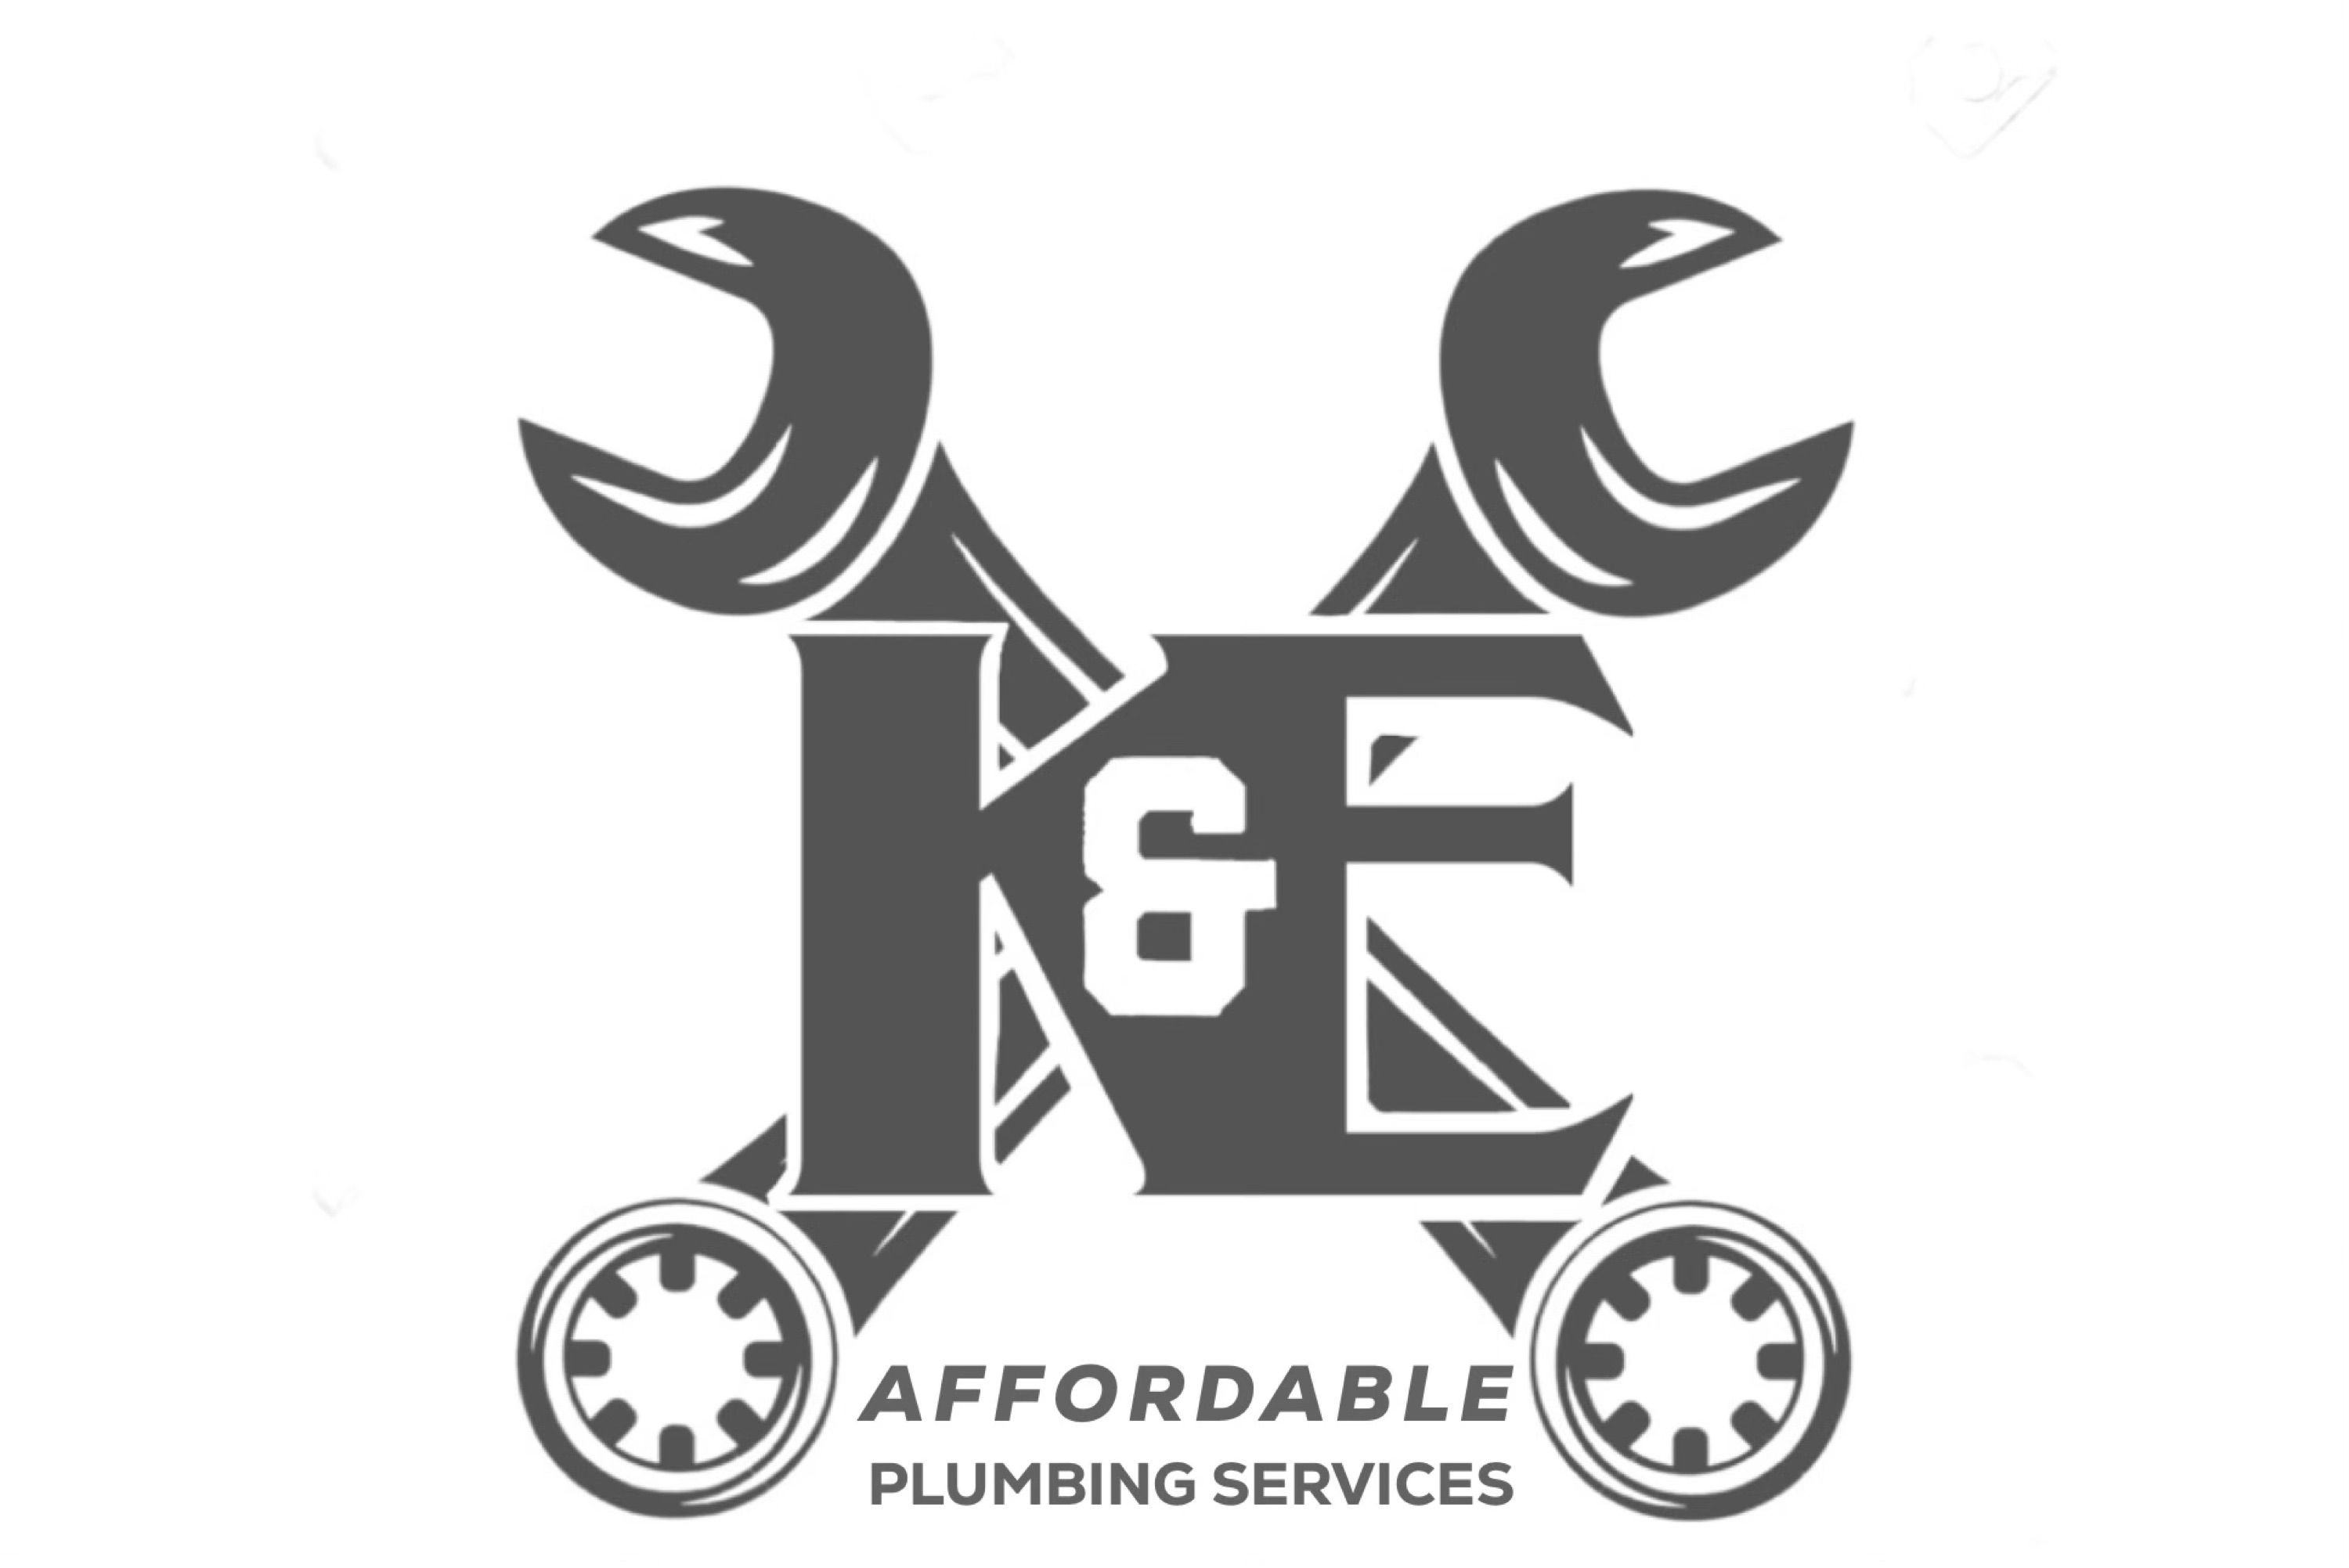 K & E Affordable Plumbing Services Logo